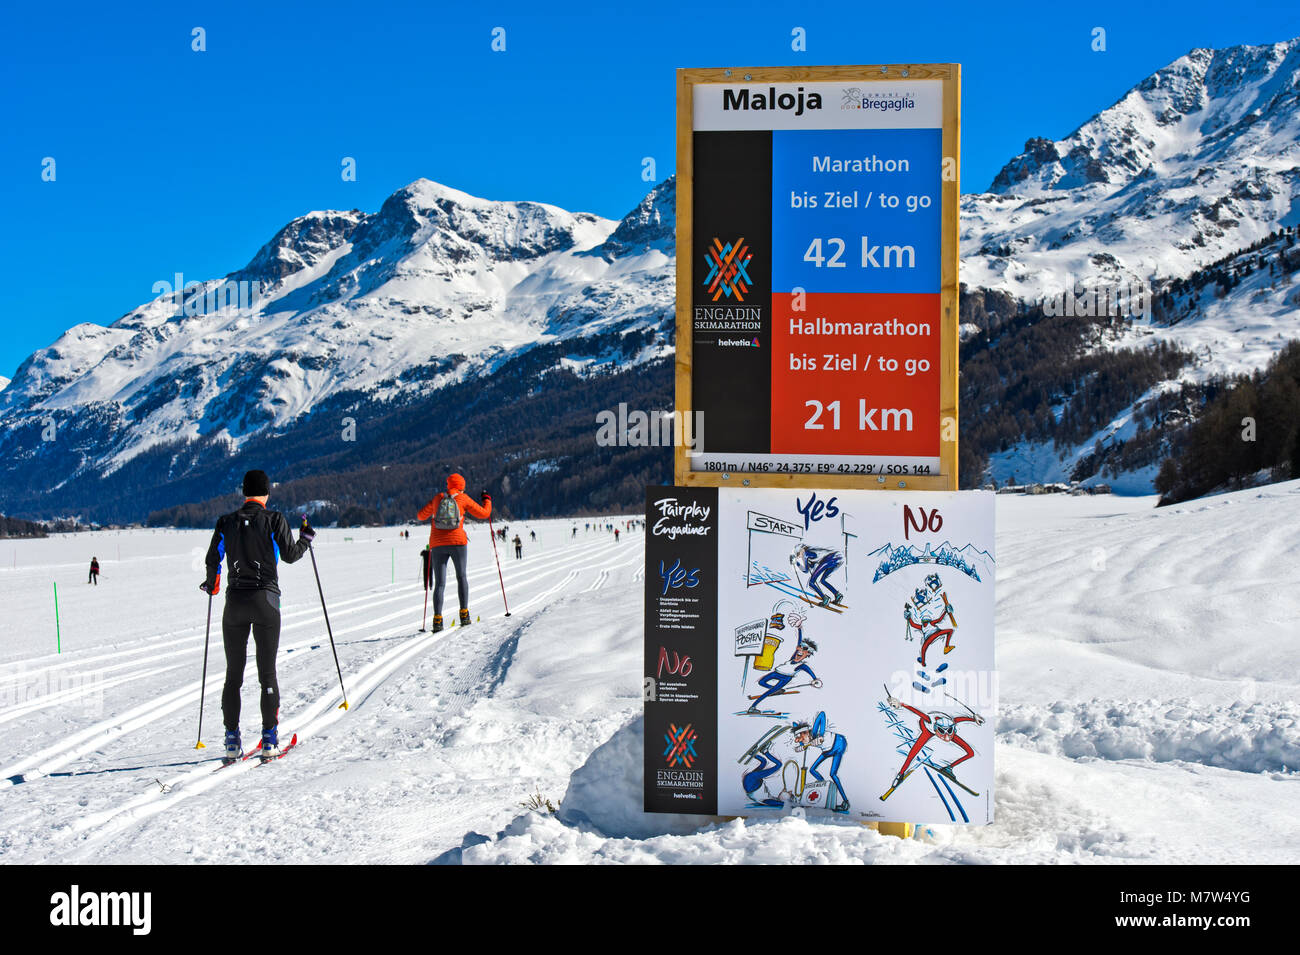 Signpost indicating distance to finish and fair-play rules at the Engadin Skimarathon, Maloja, Engadin, Grisons, Switzerland Stock Photo